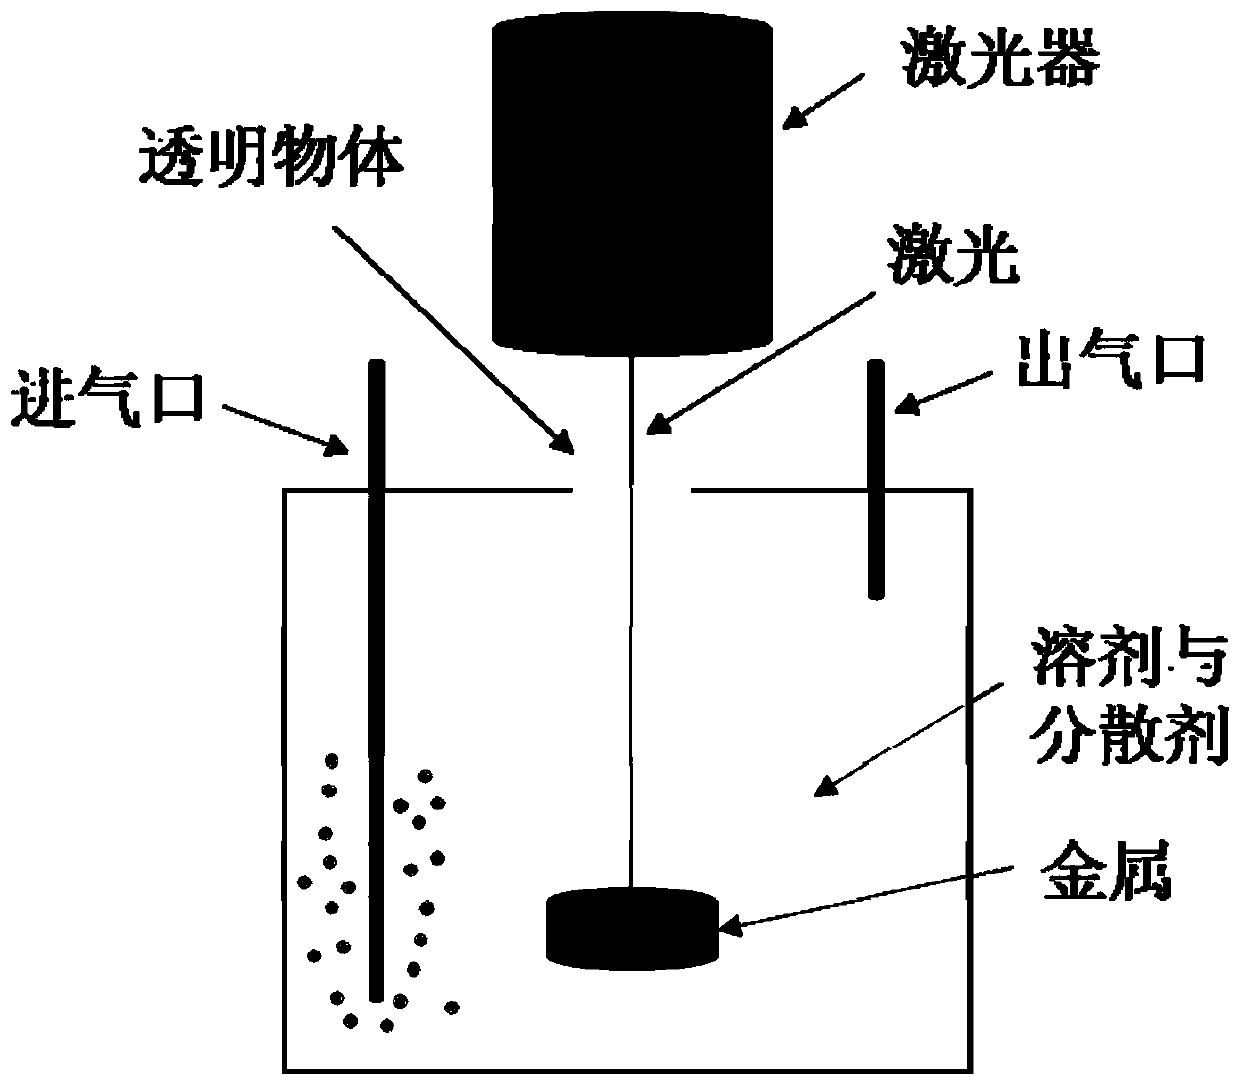 Metal monatomic catalyst and preparation method thereof